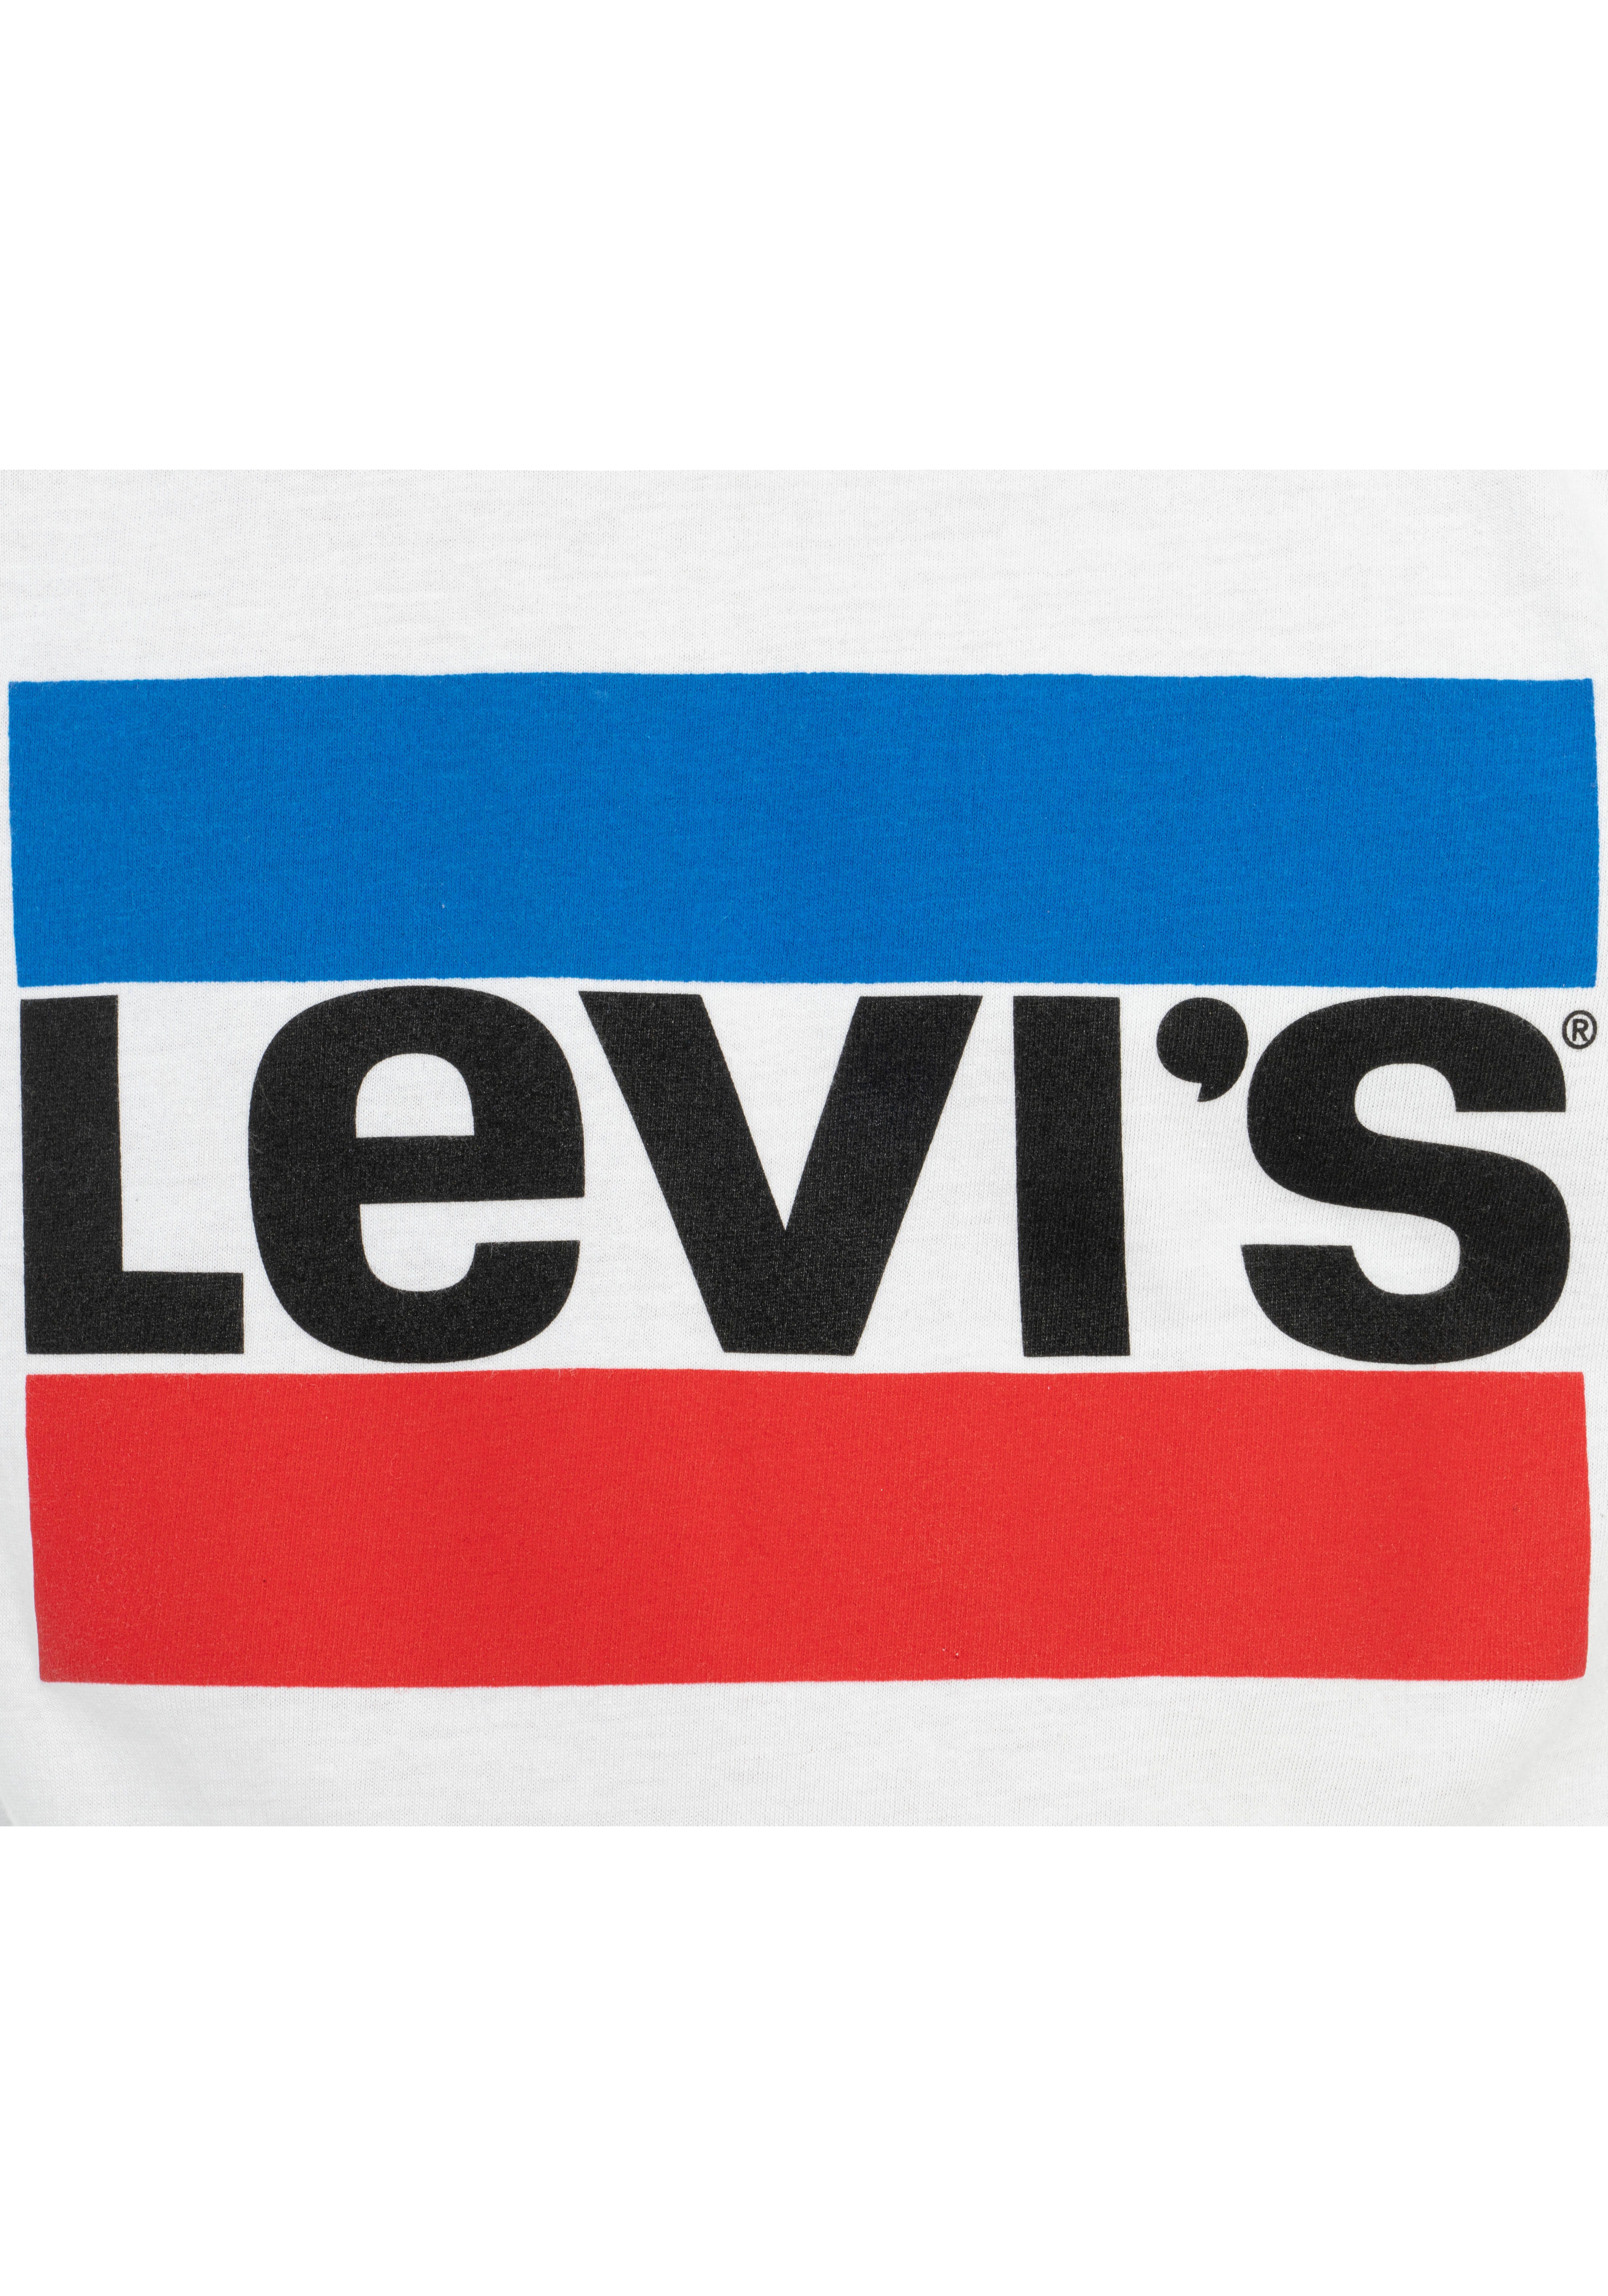 for T-Shirt BOYS white TEE Kids Levi's® SPORTSWEAR LOGO